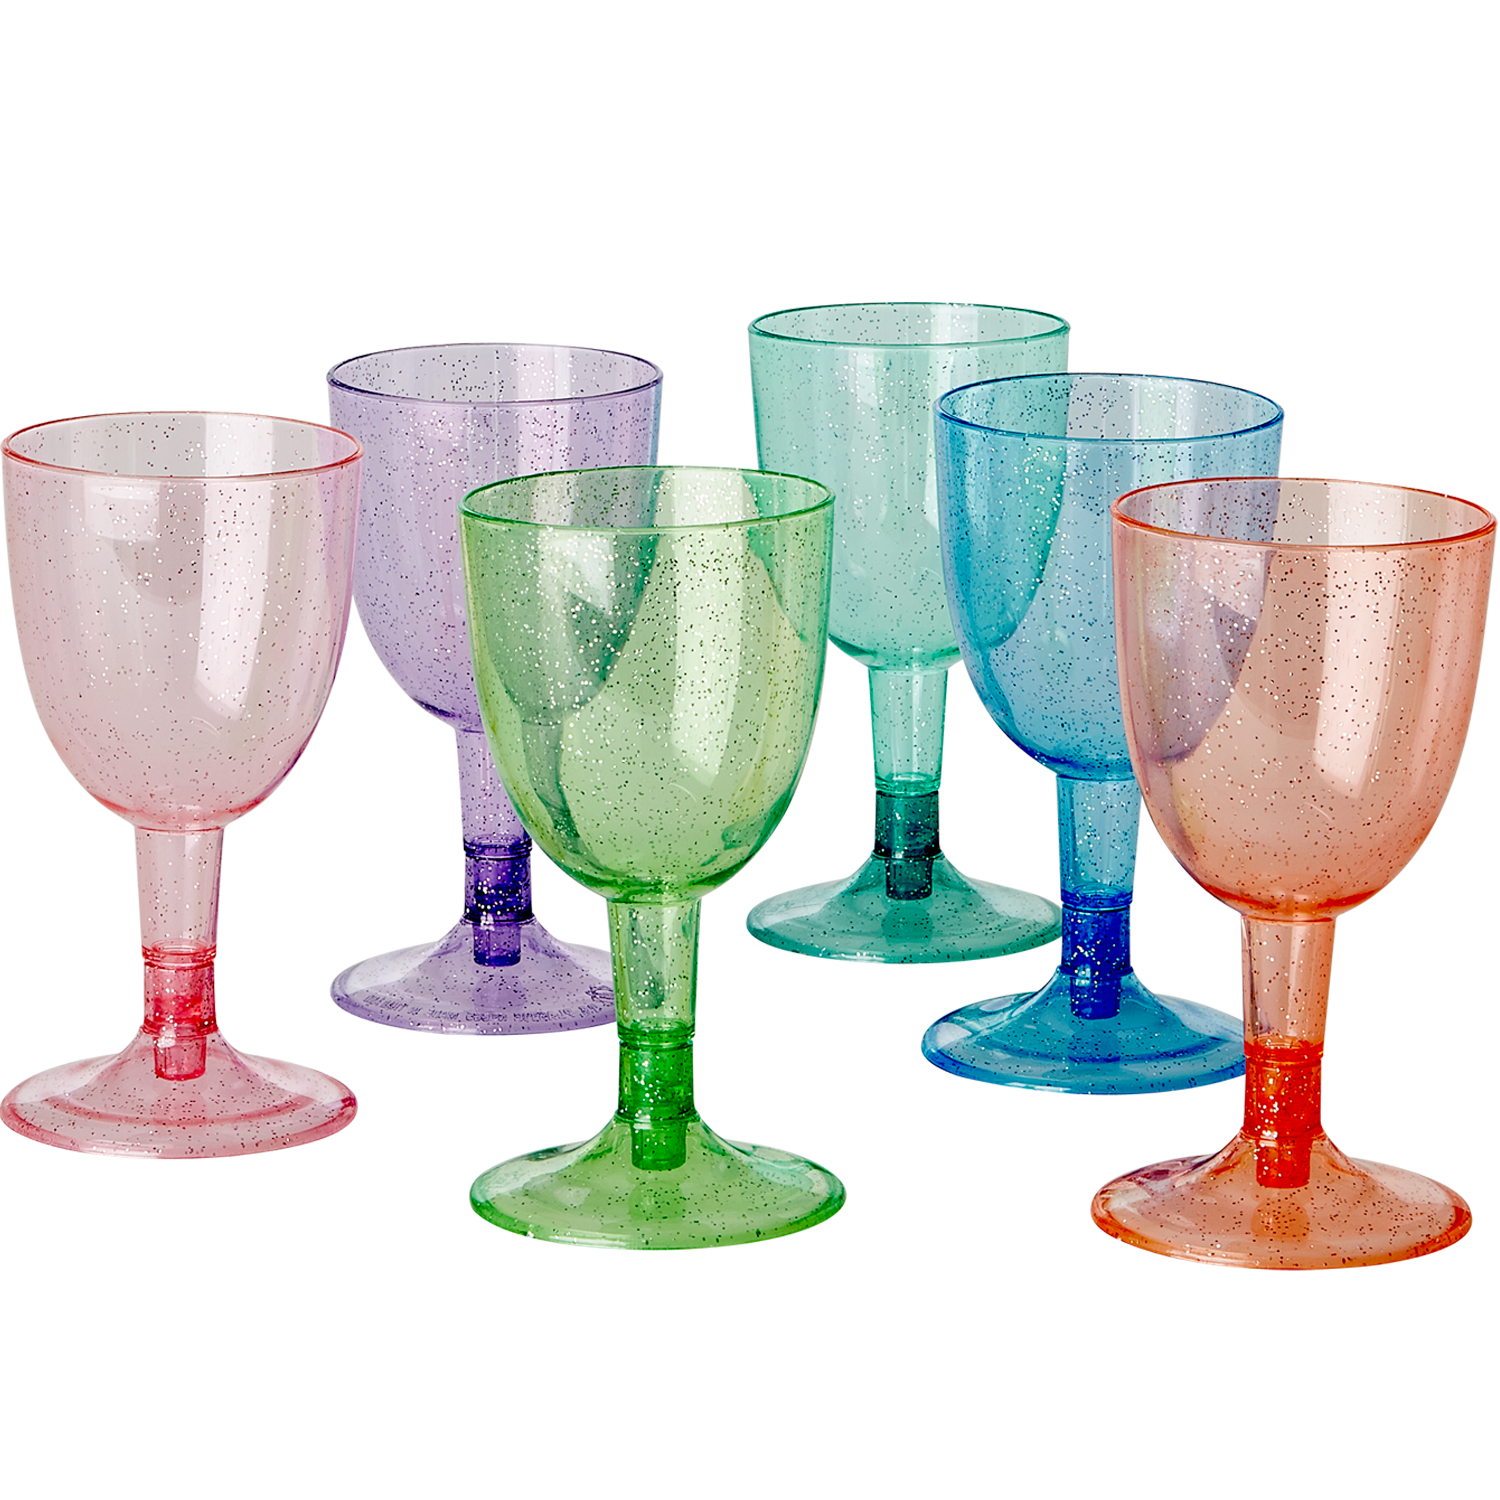 Пластиковые бокалы купить. Пластиковые бокалы. Цветные пластиковые бокалы. Пластиковые бокалы для вина. Пластиковые одноразовые бокалы.